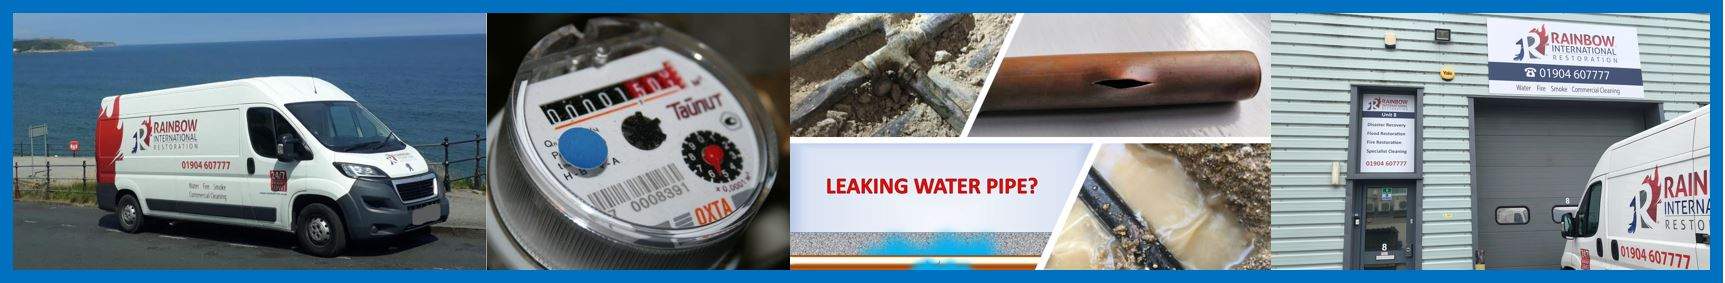 Water Leak Under House UK 